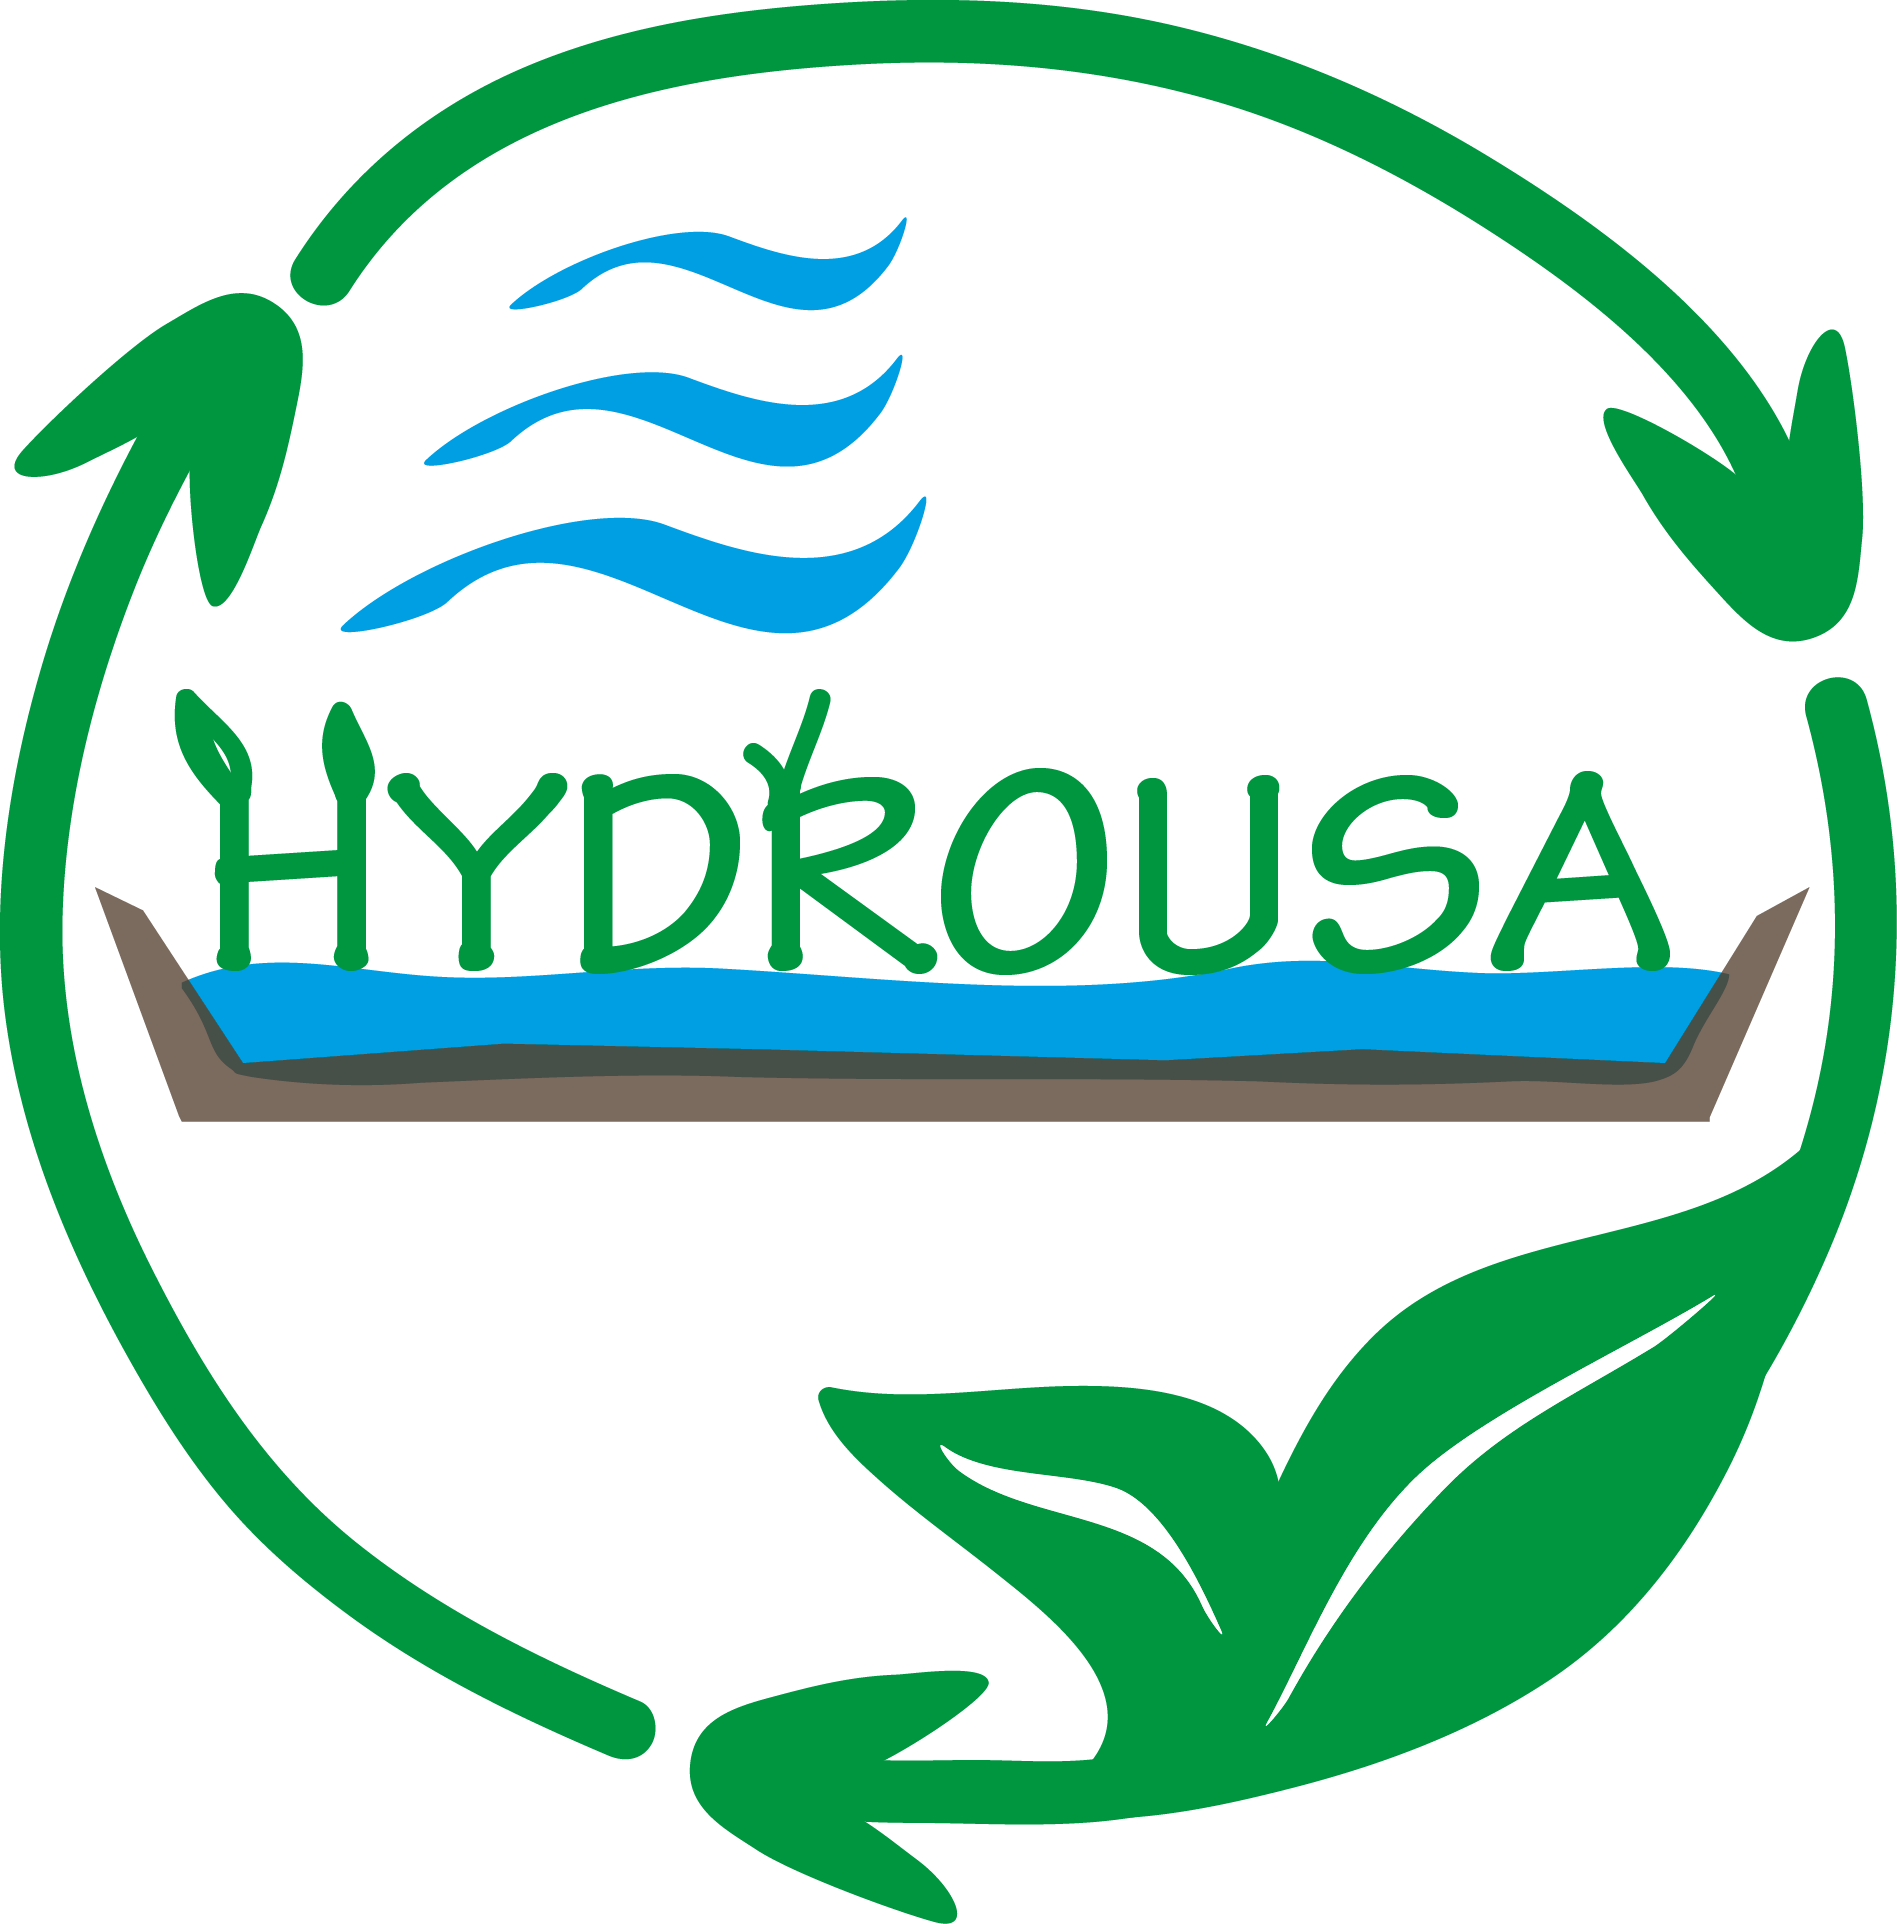 Hydrousa Logo transp